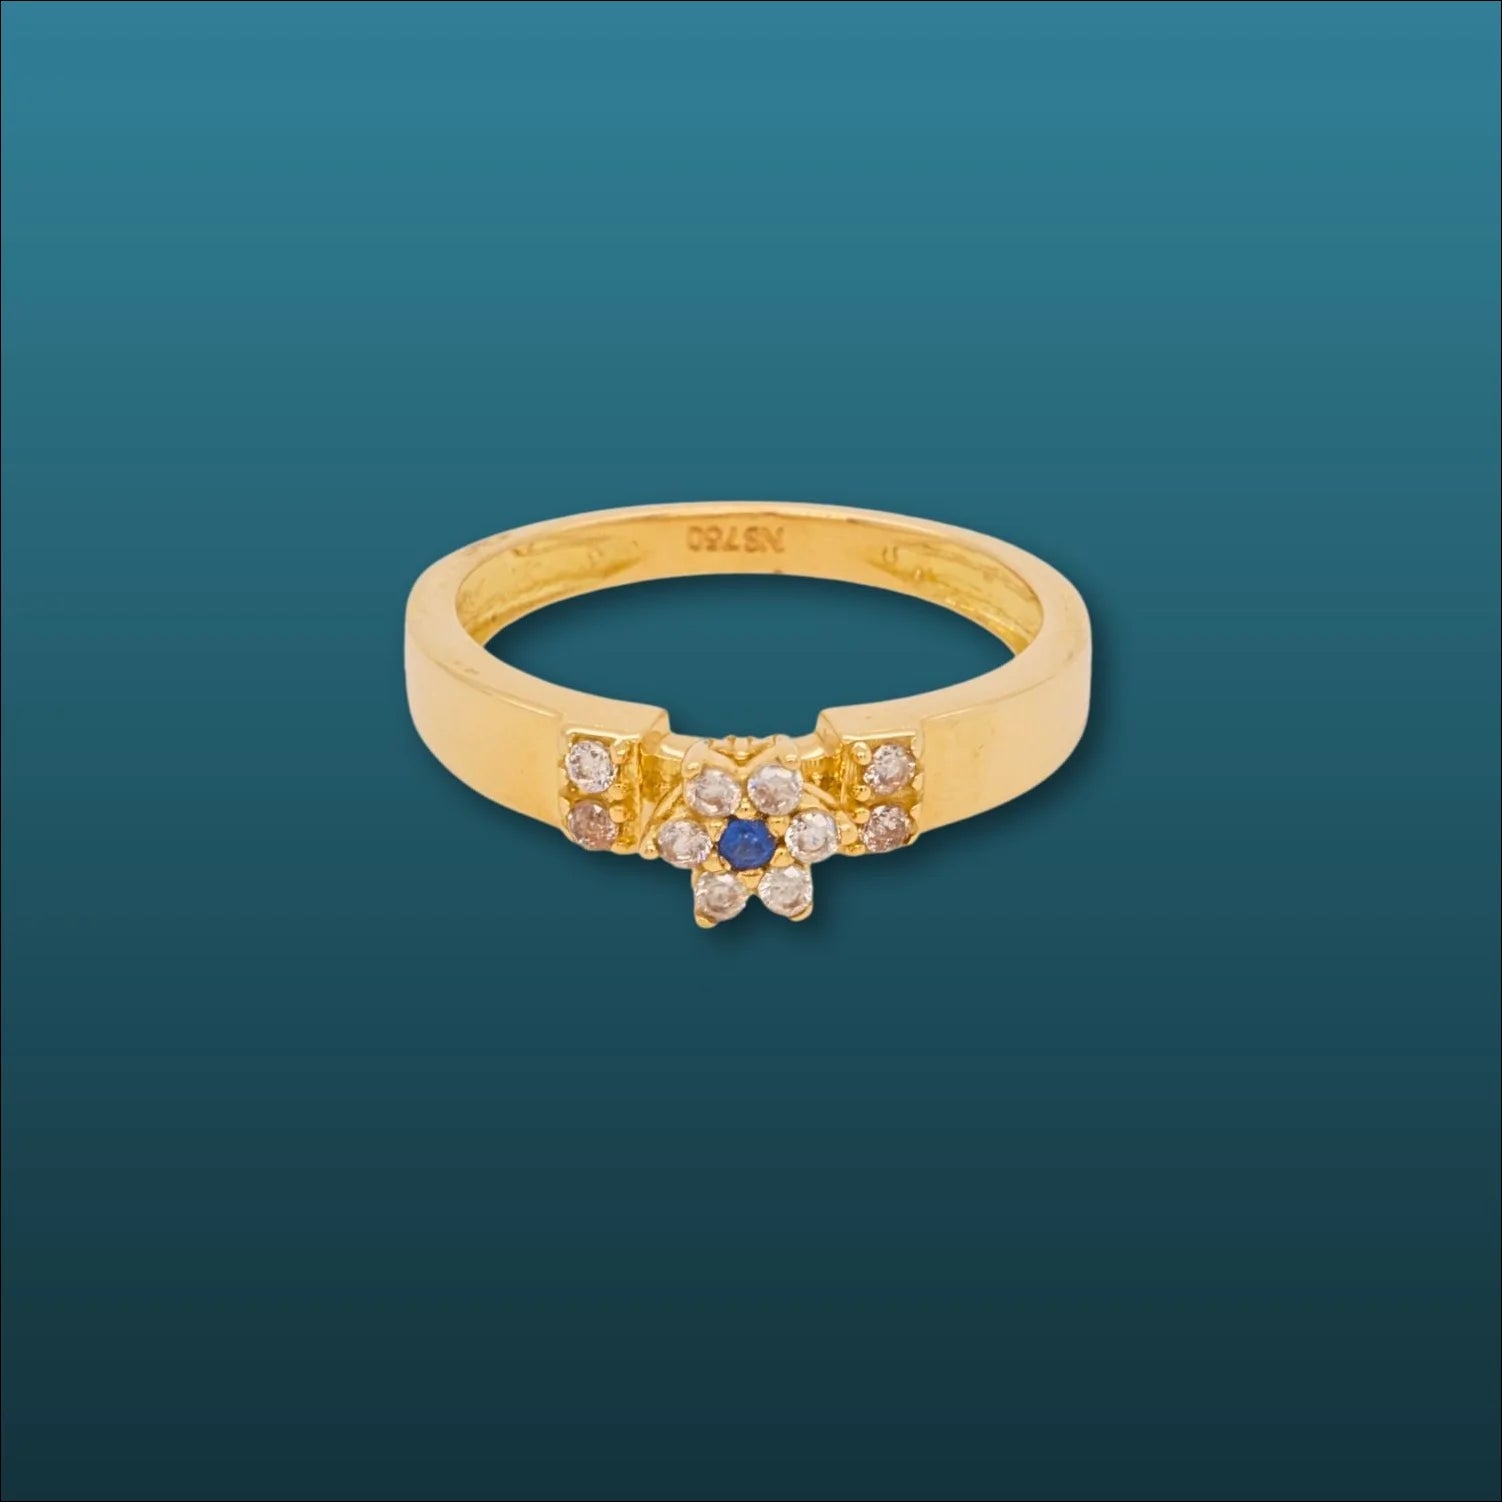 Elegant 18k gold ring with cubic zirconias | Rings